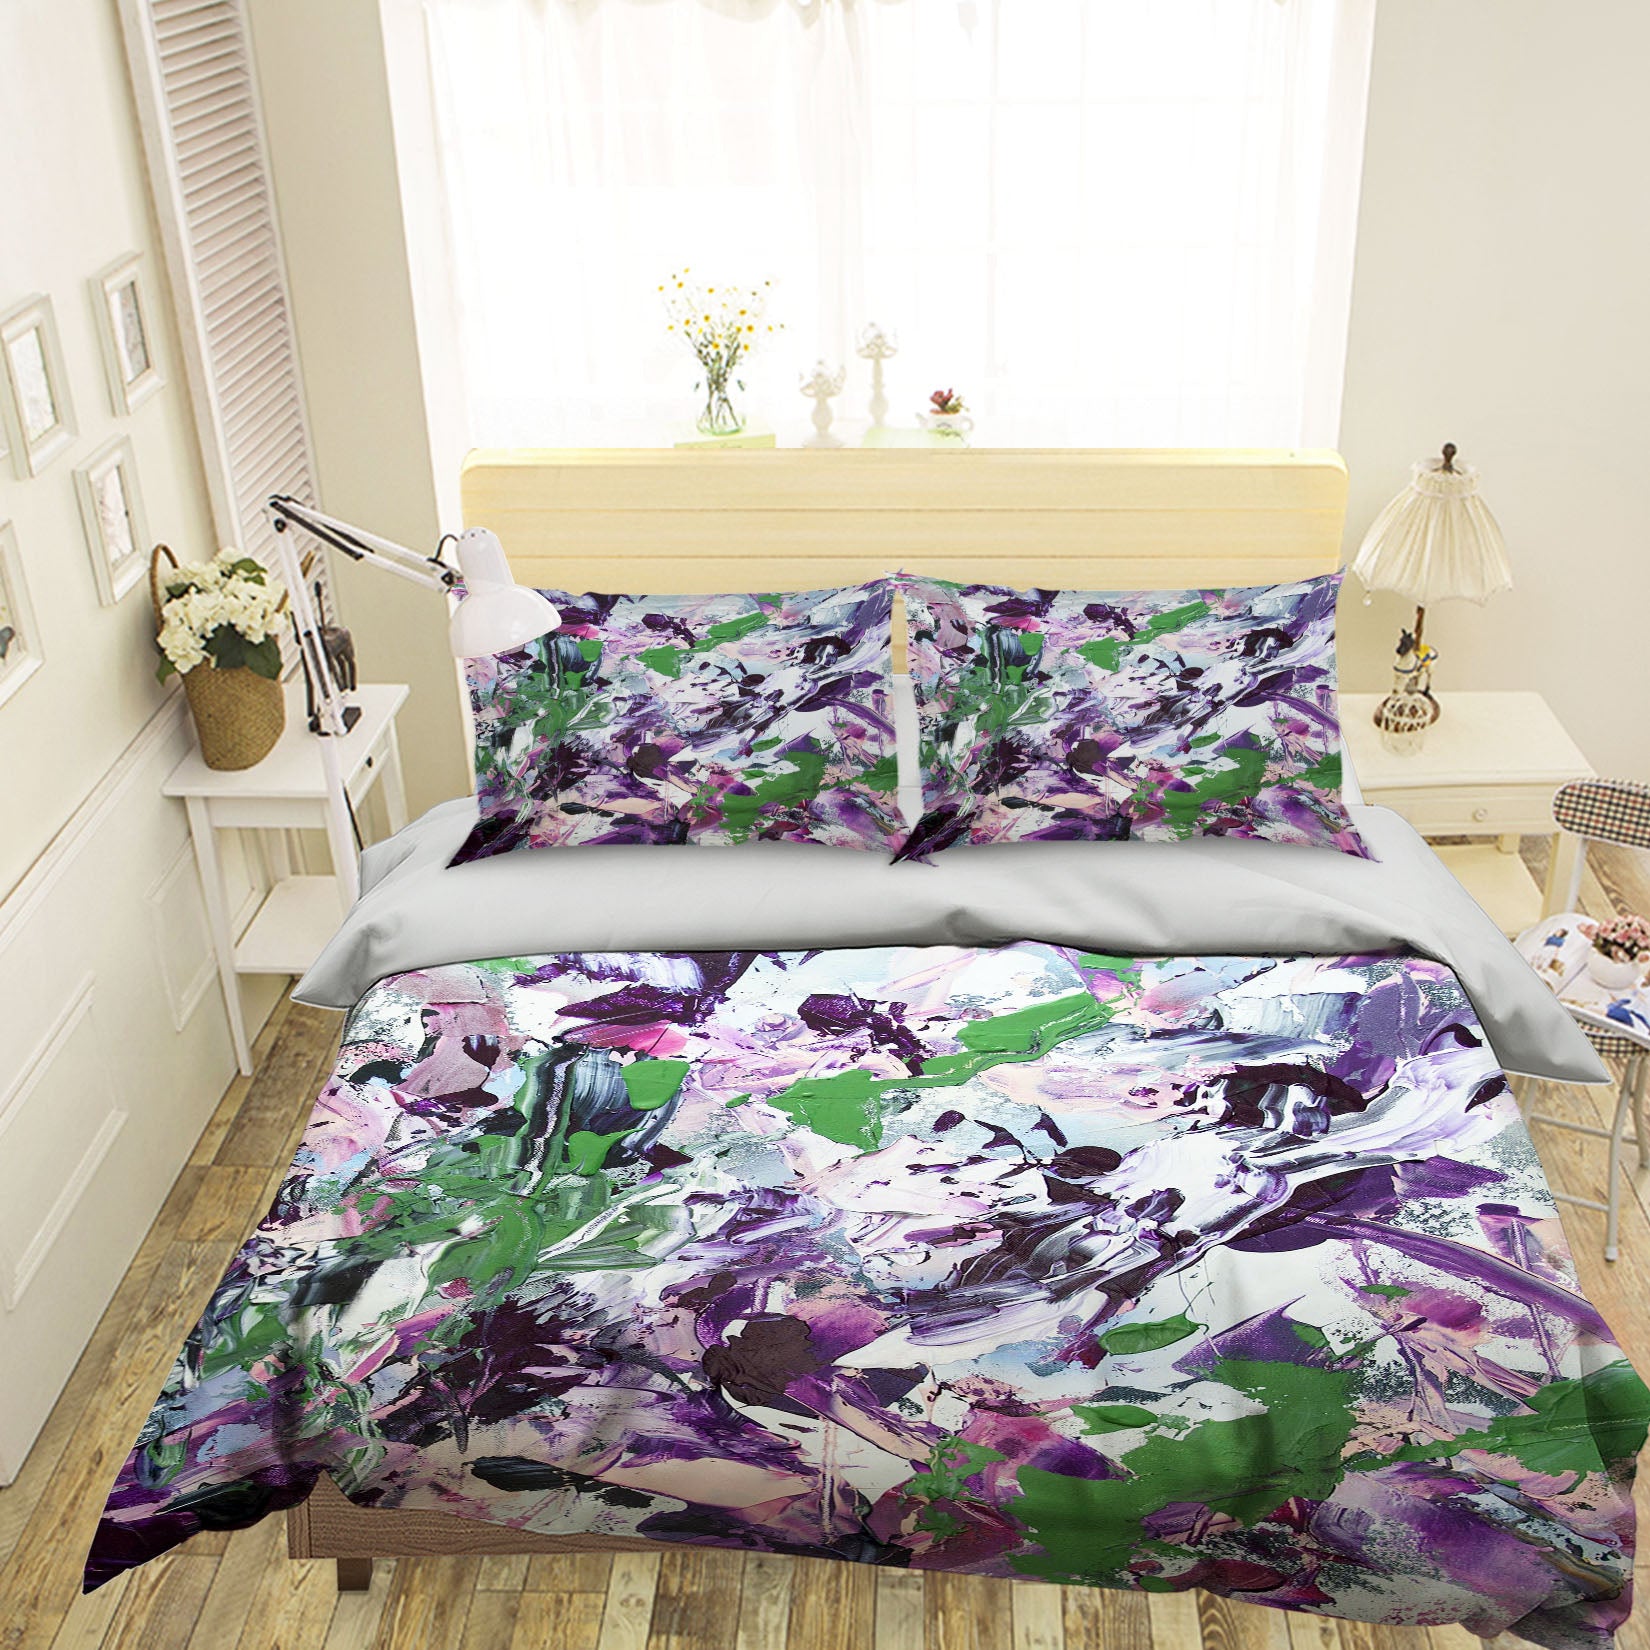 3D Purple Pigment 1133 Allan P. Friedlander Bedding Bed Pillowcases Quilt